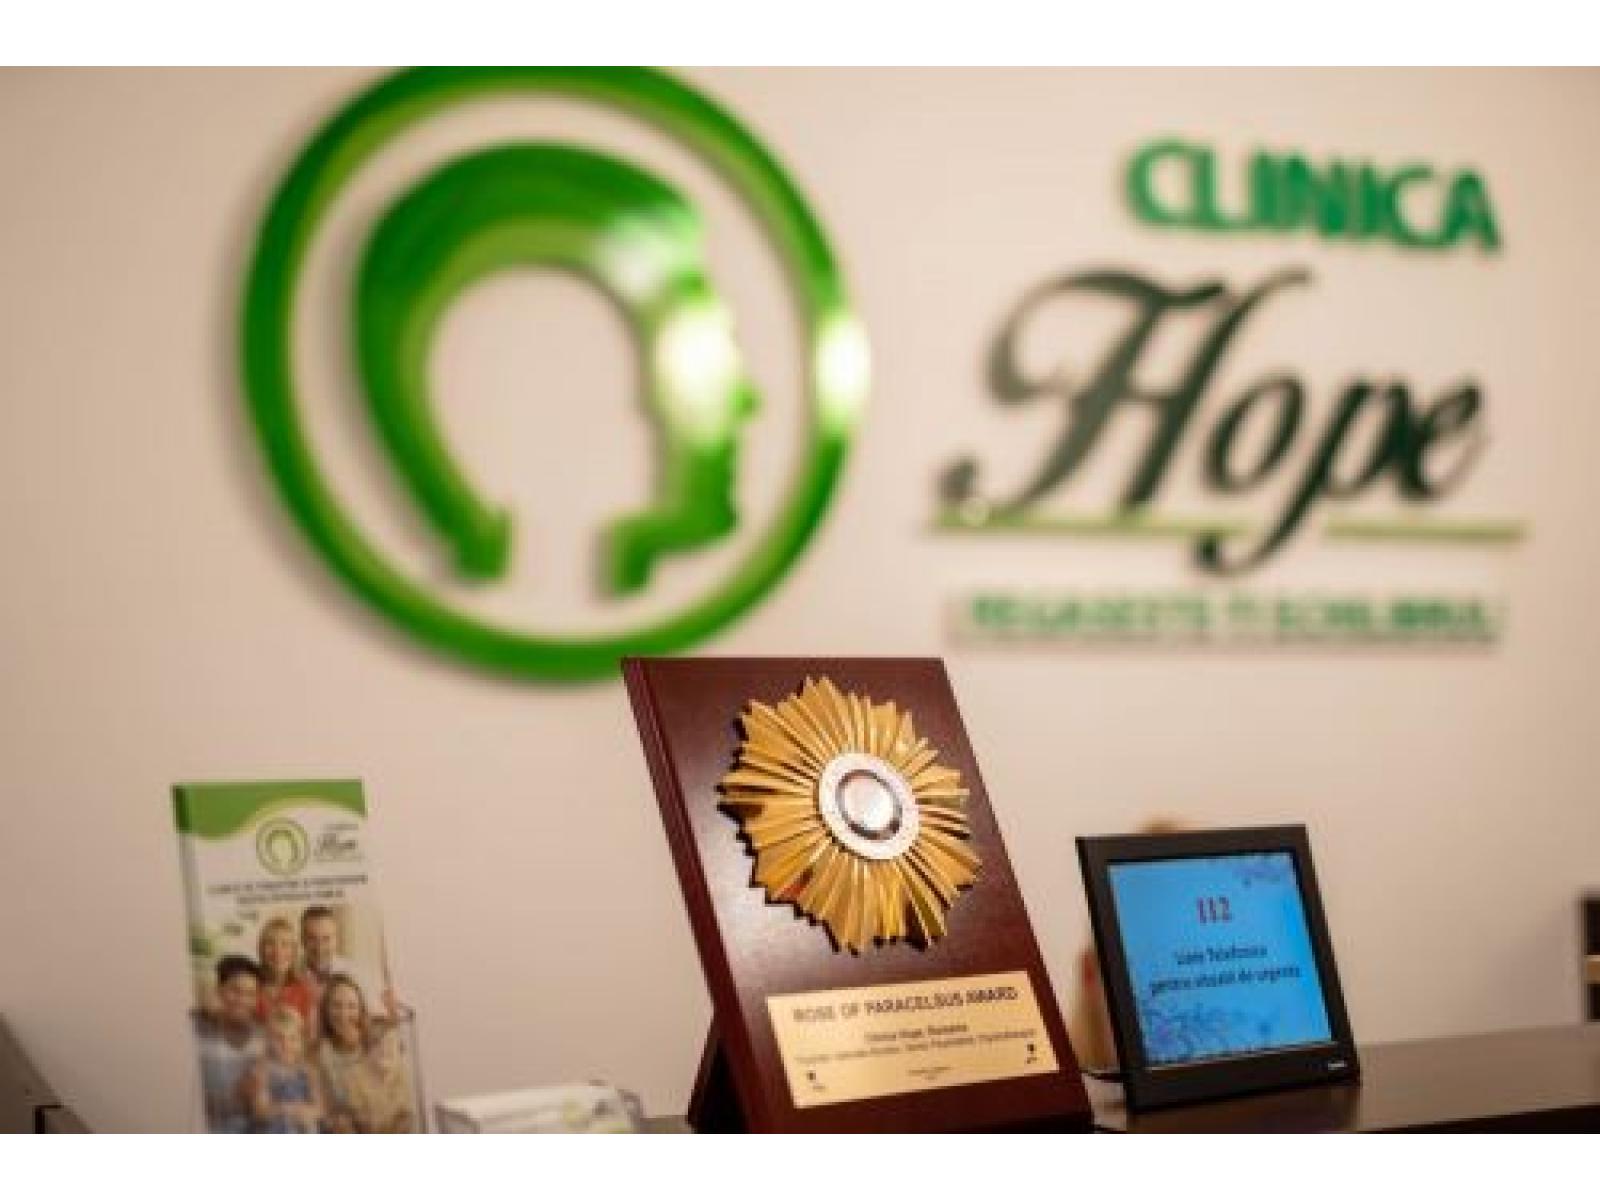 Clinica Hope - ggg.jpg